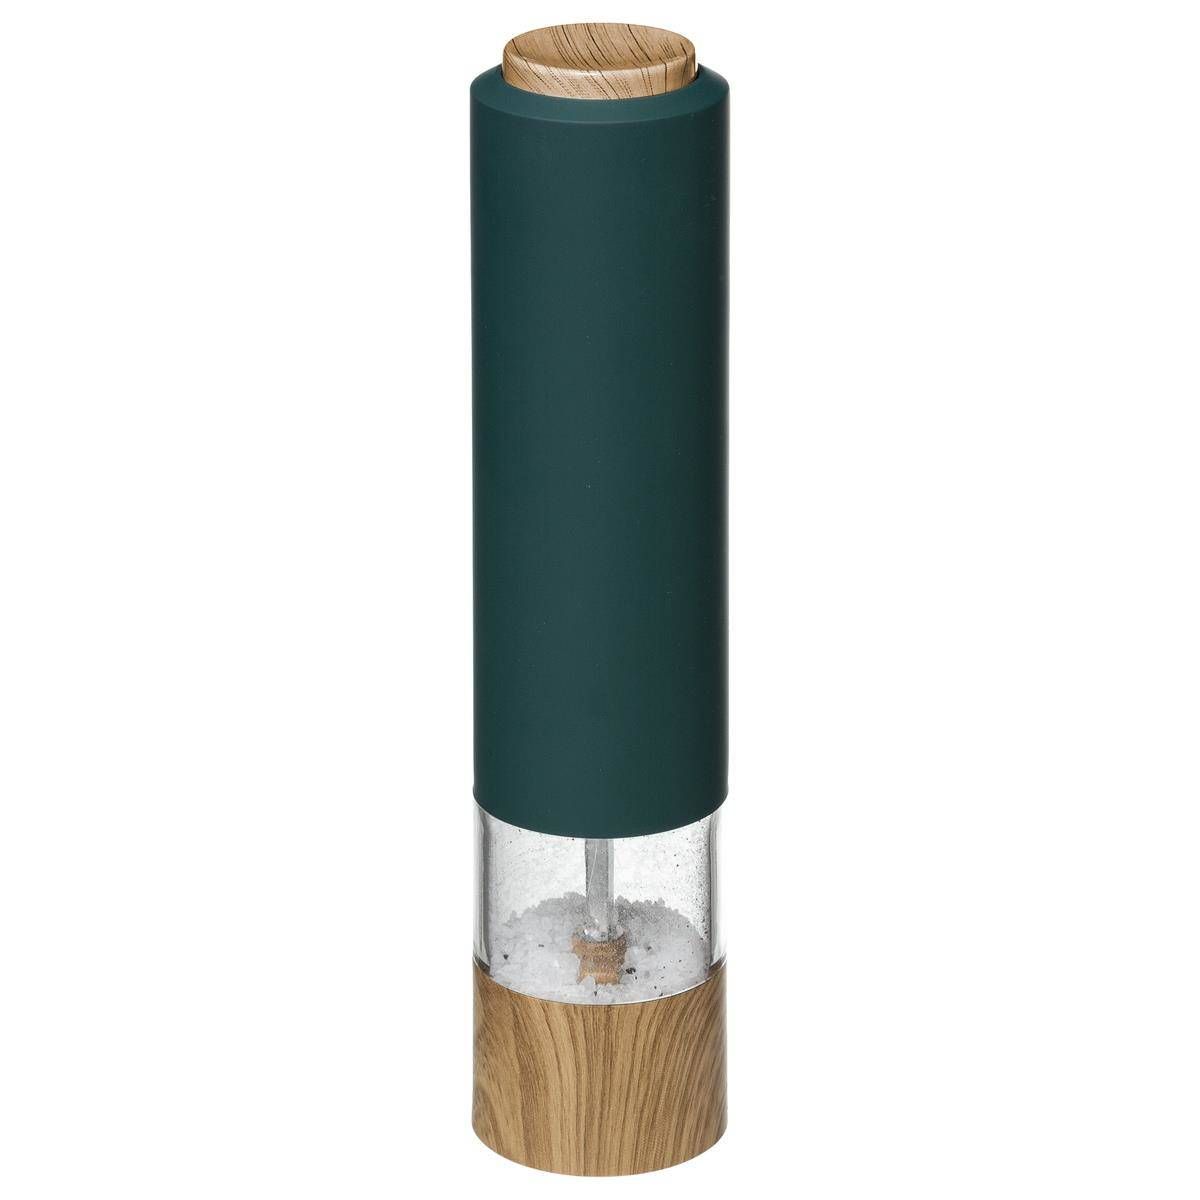 5five Simply Smart Elektrický mlýnek na sůl a pepř, mořská zelená barva - EMAKO.CZ s.r.o.